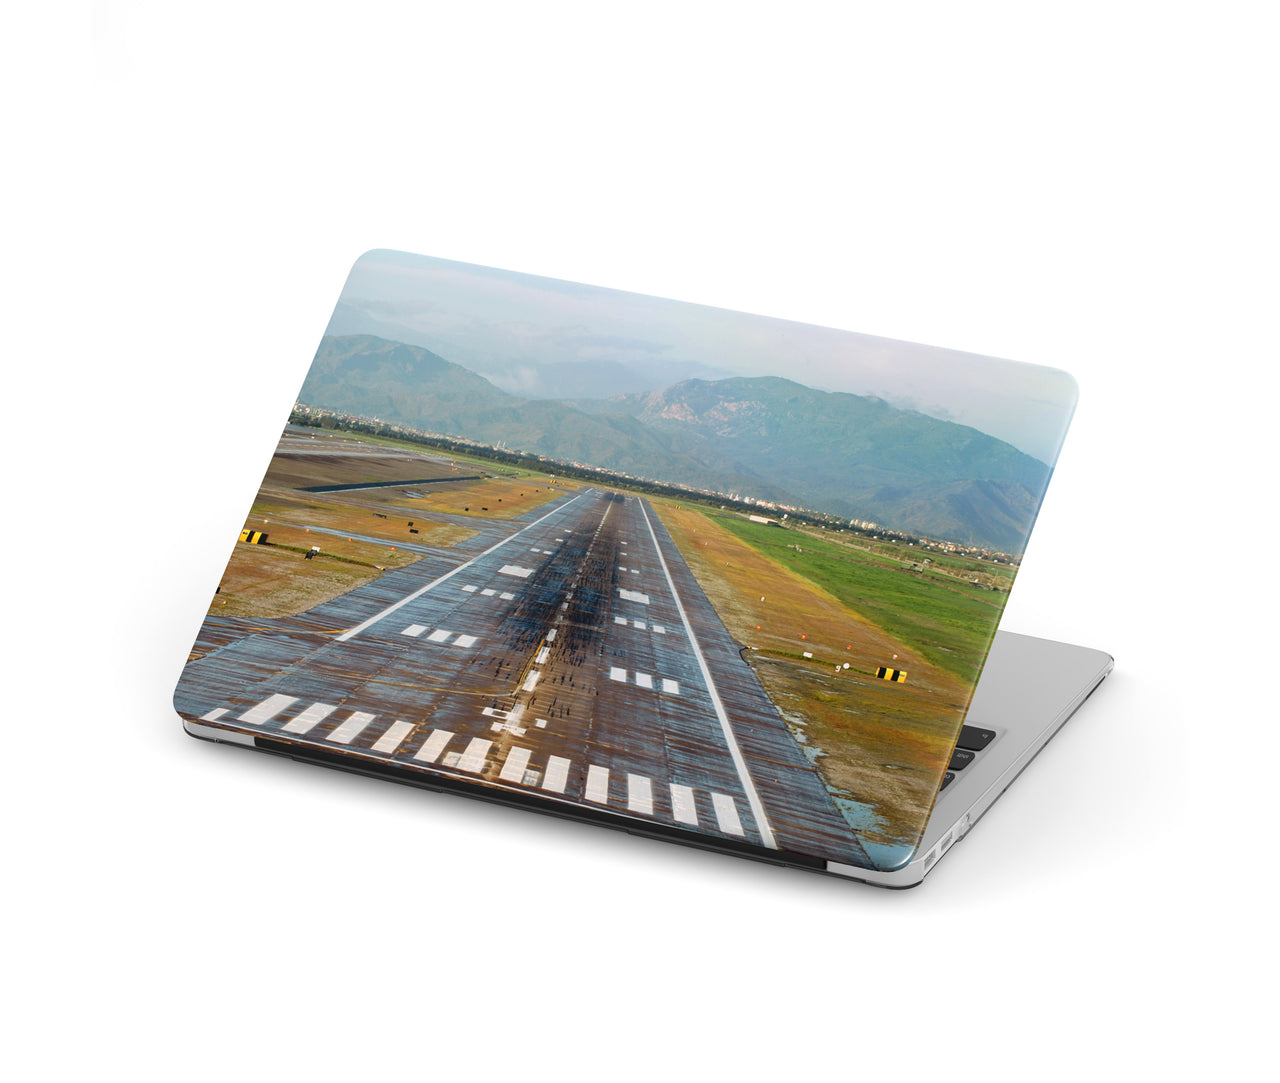 Amazing Mountain View & Runway Designed Macbook Cases